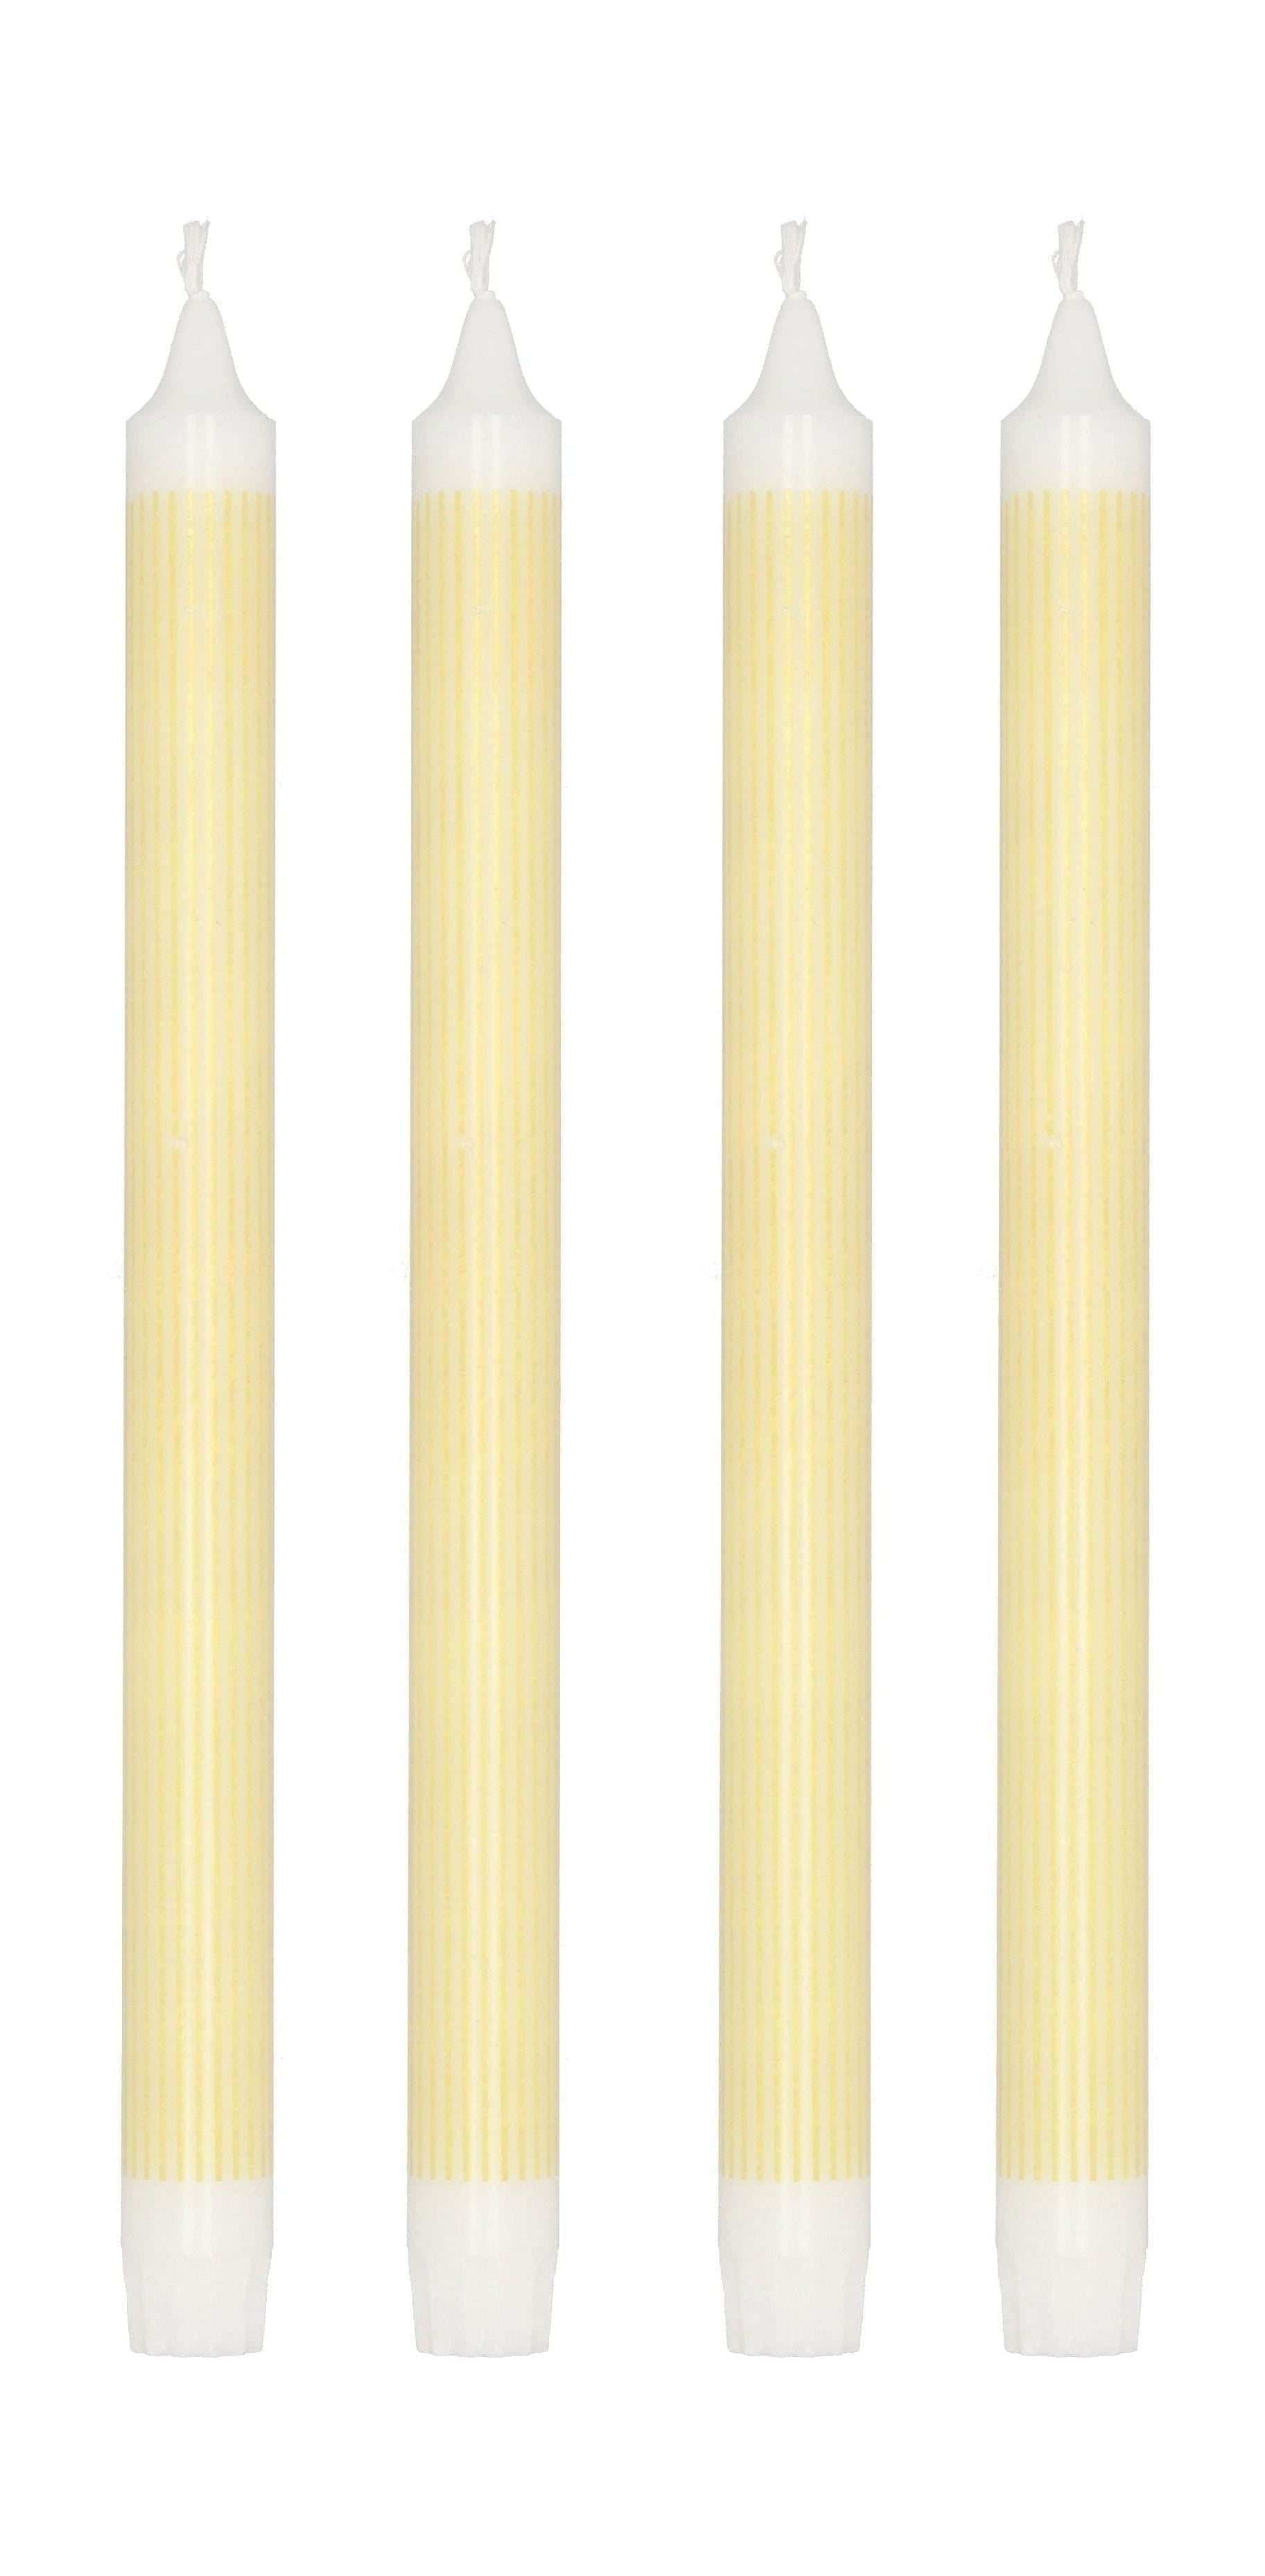 Villa samlingsstilar Stick Candle Set of 4 Øx H 2,2x29, gul